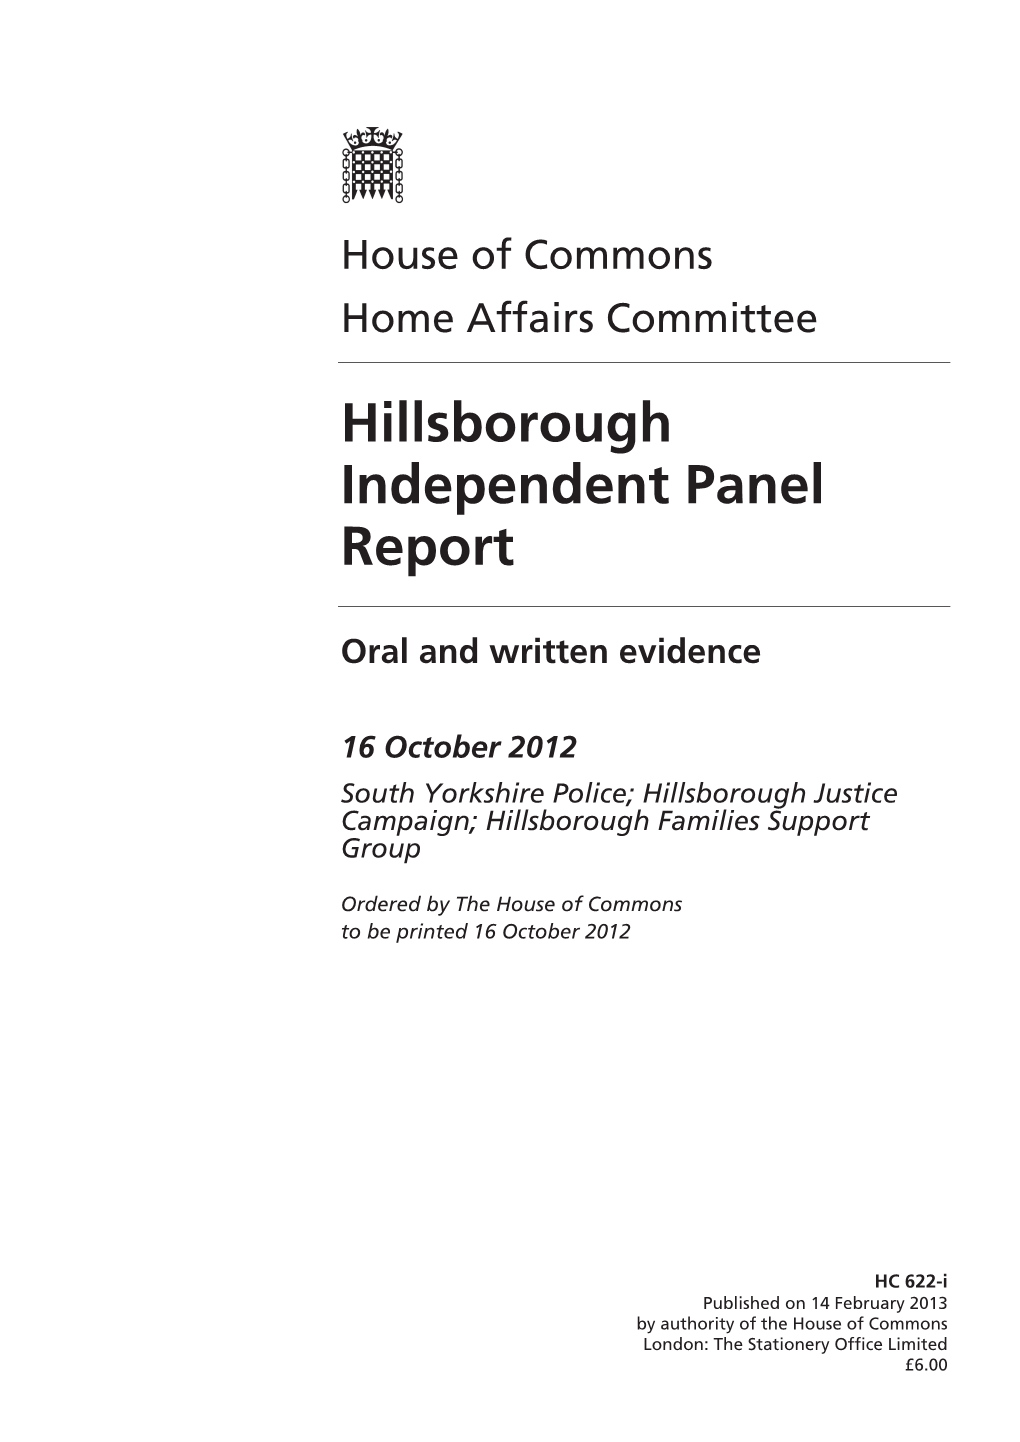 Hillsborough Independent Panel Report